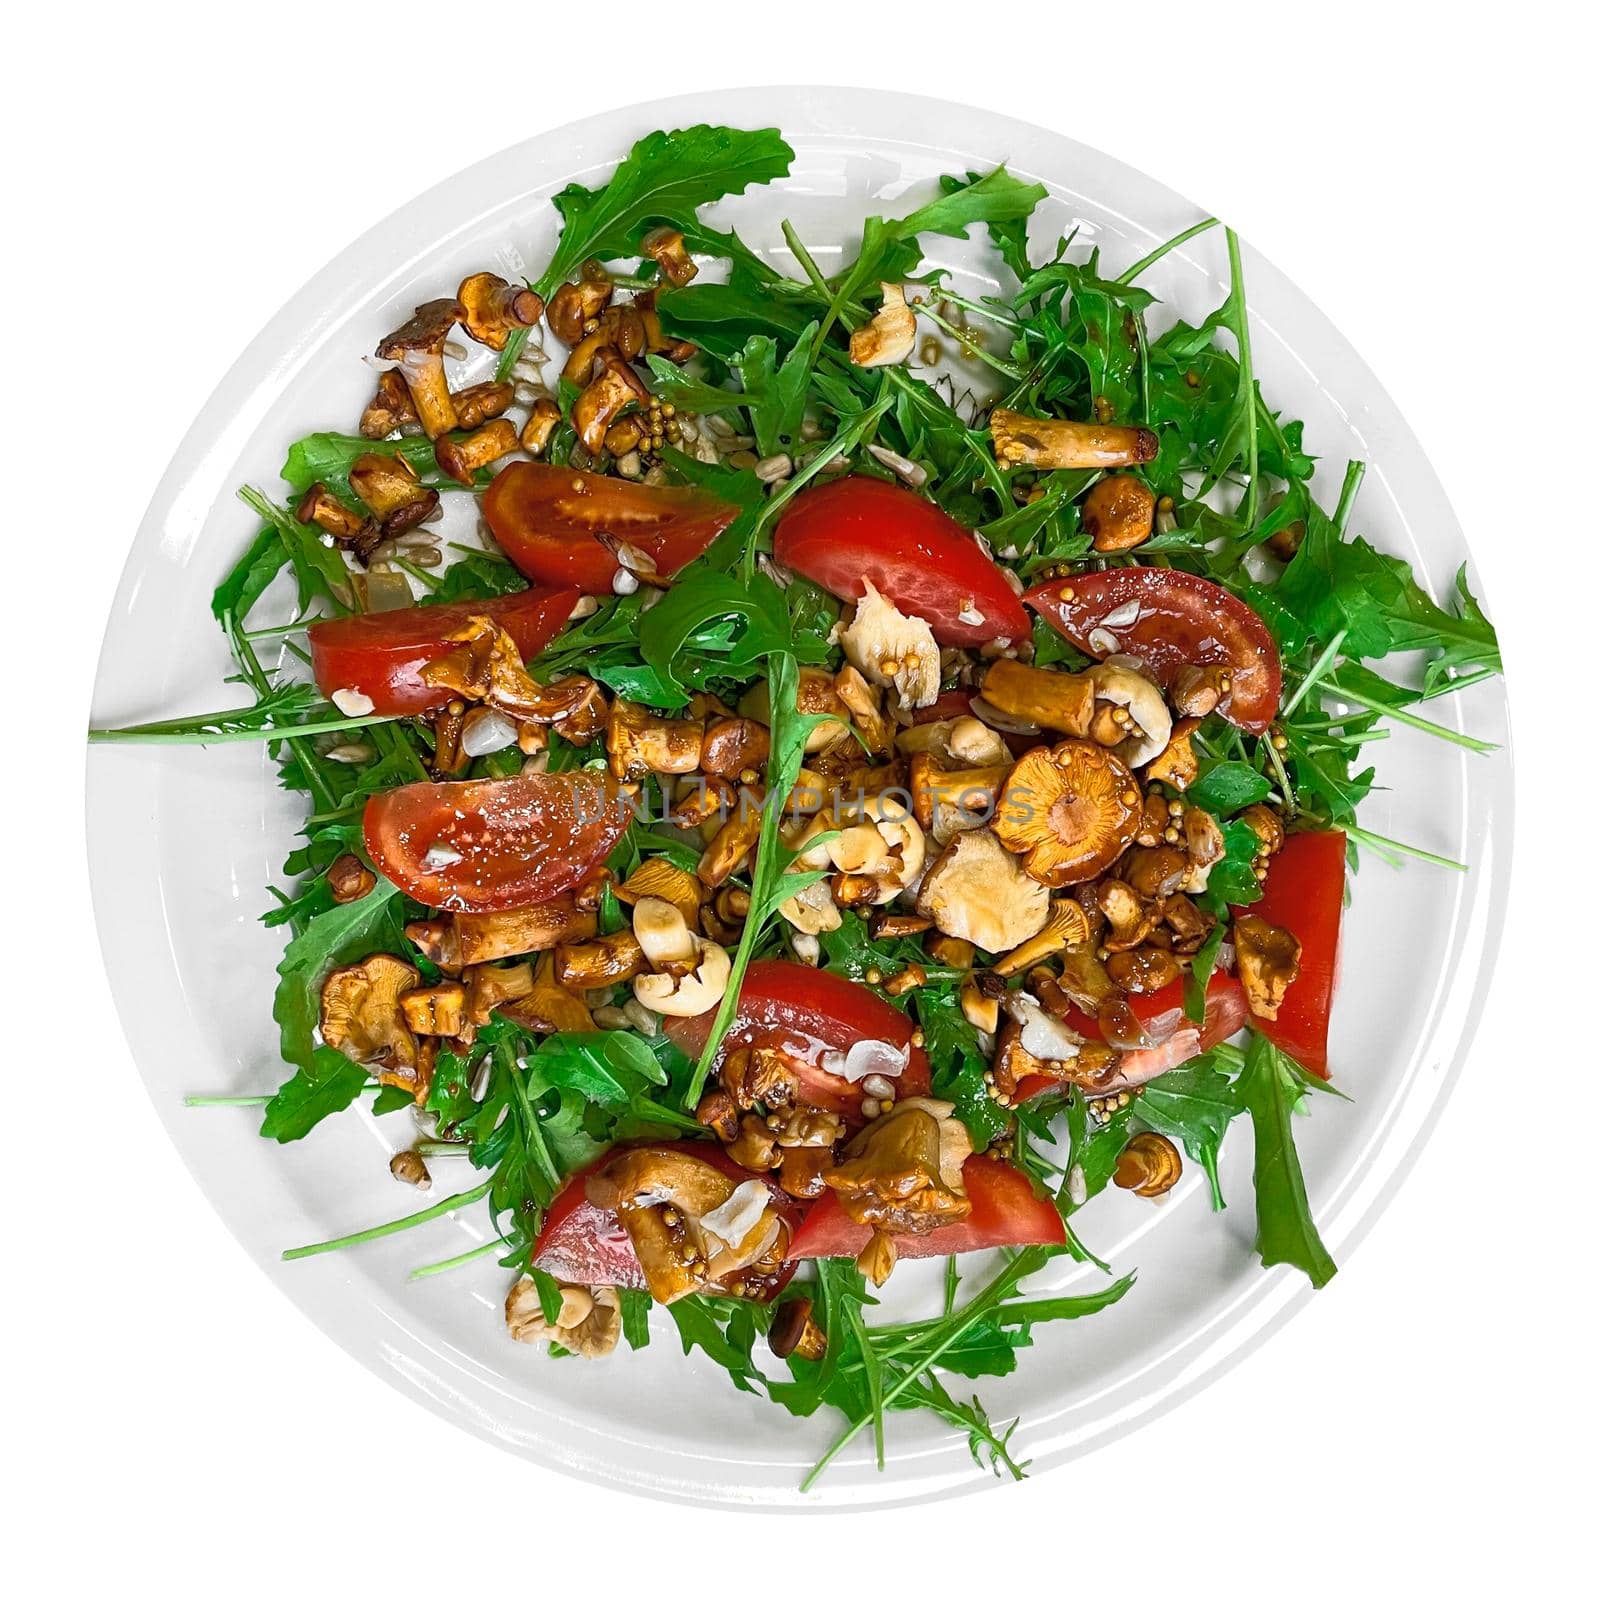 Salad with arugula and chanterelle mushrooms